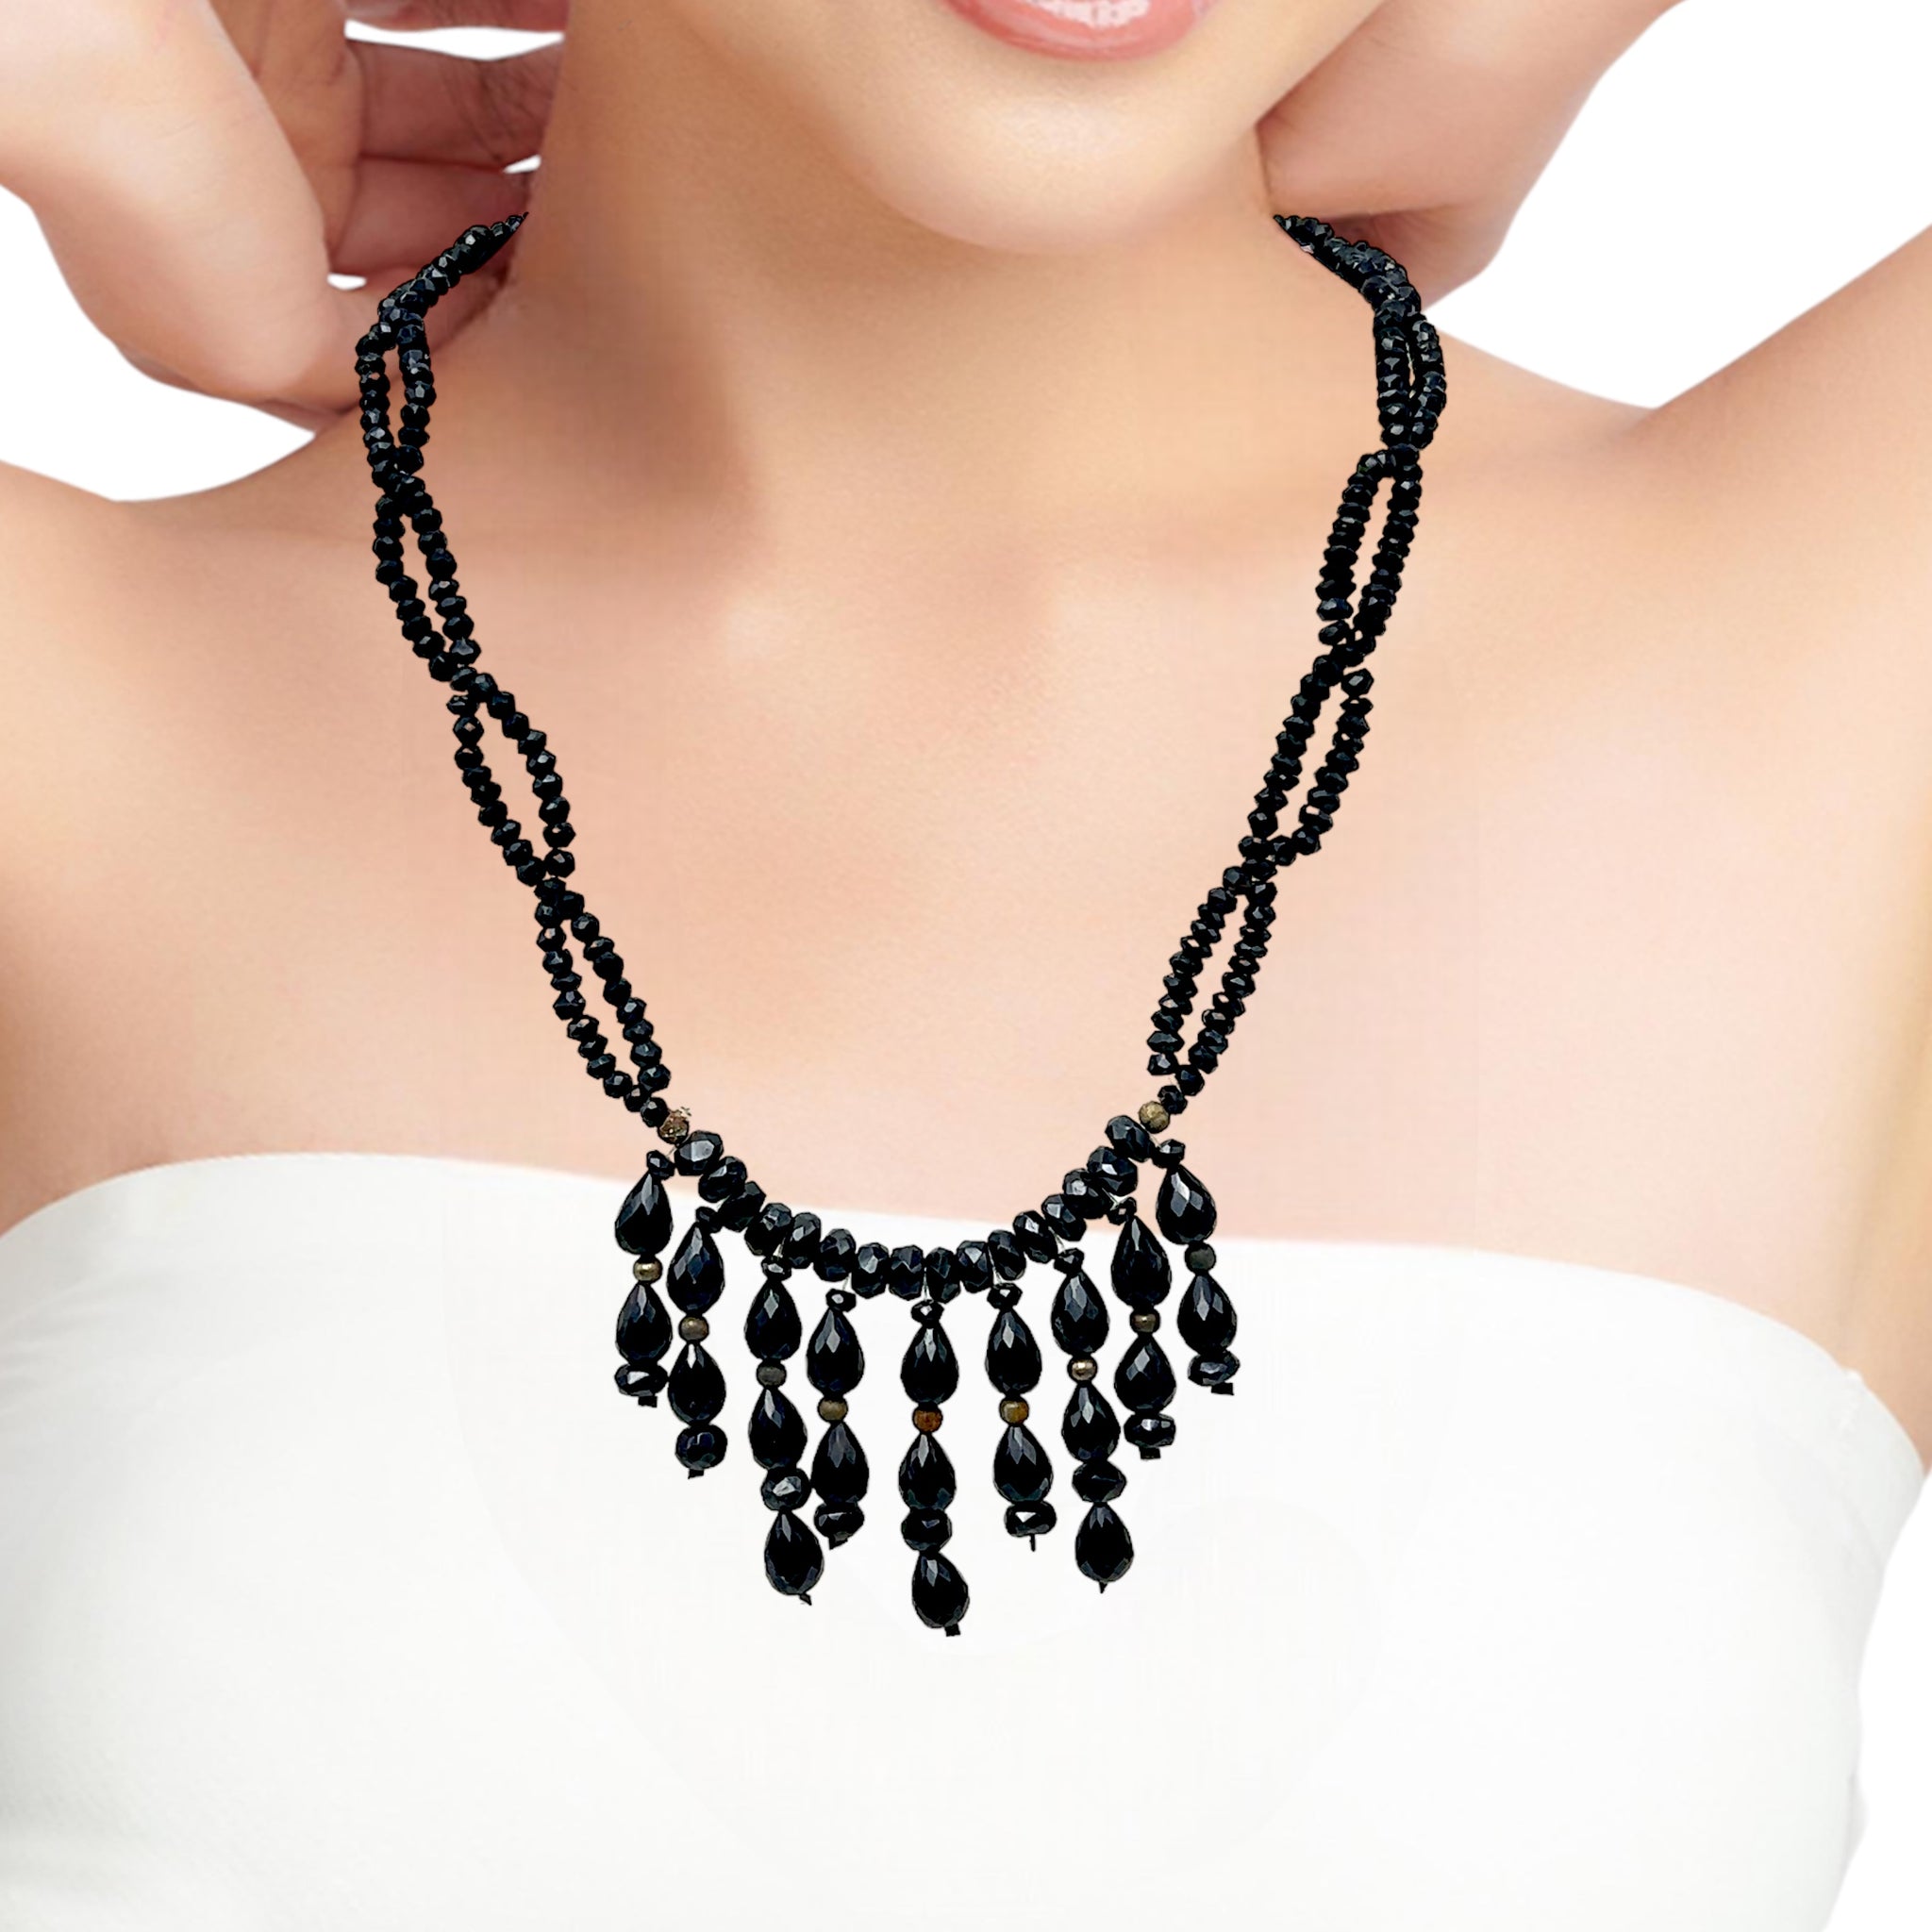 Natural Handmade Necklace 16"-18" Black Pearl Gemstone Beads Jewelry